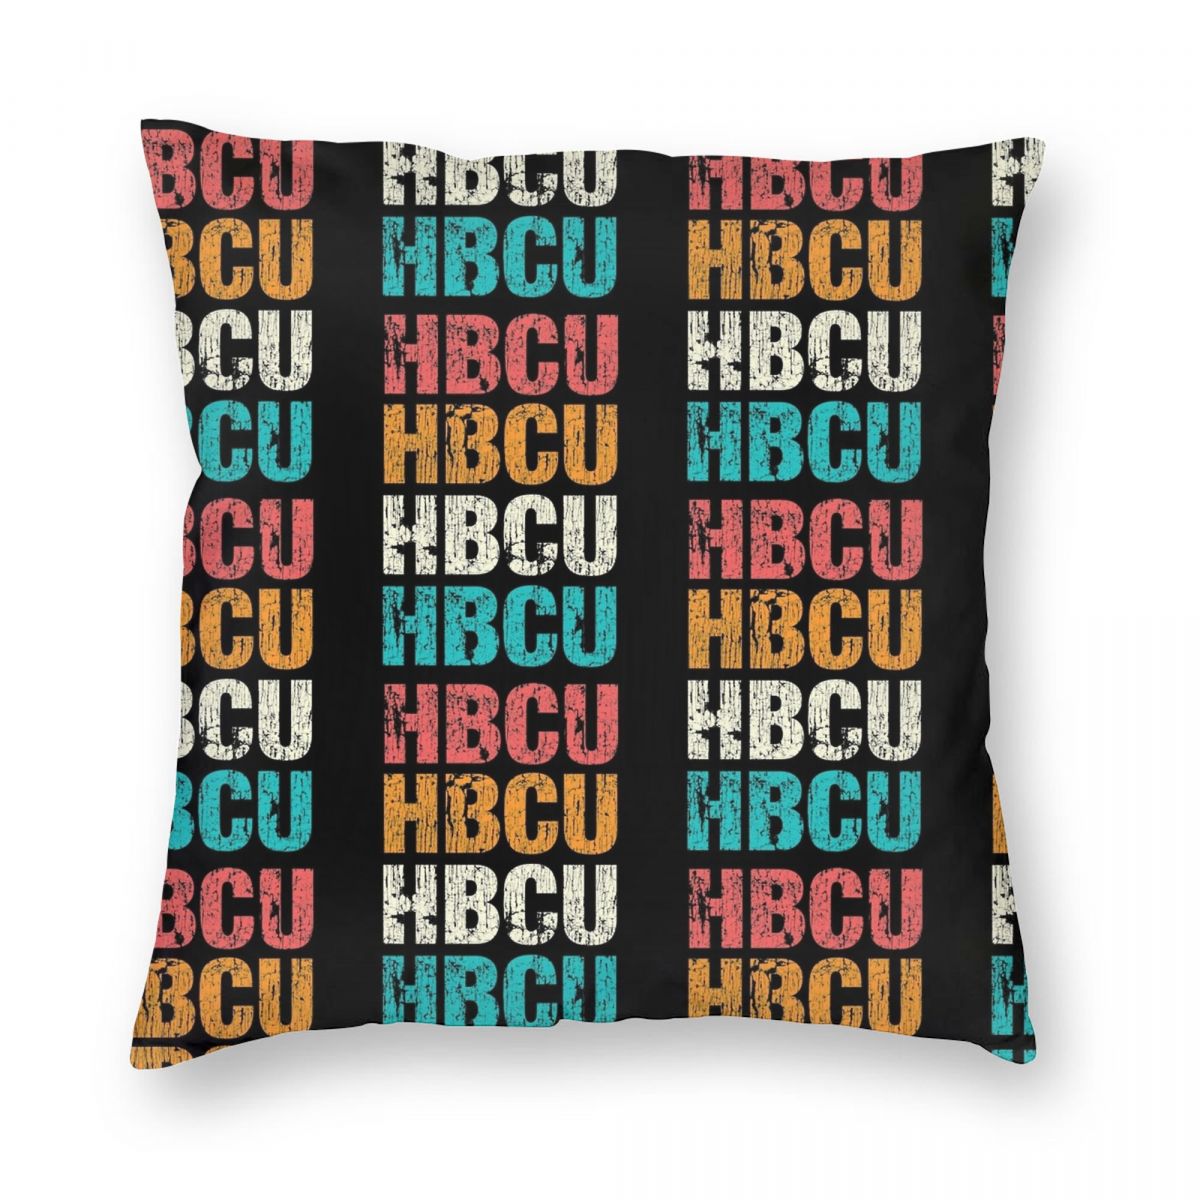 HBCU Vintage Letters Square Pillowcase Polyester Linen Velvet Creative Zip Decor Throw Pillow Case Home Cushion Cover